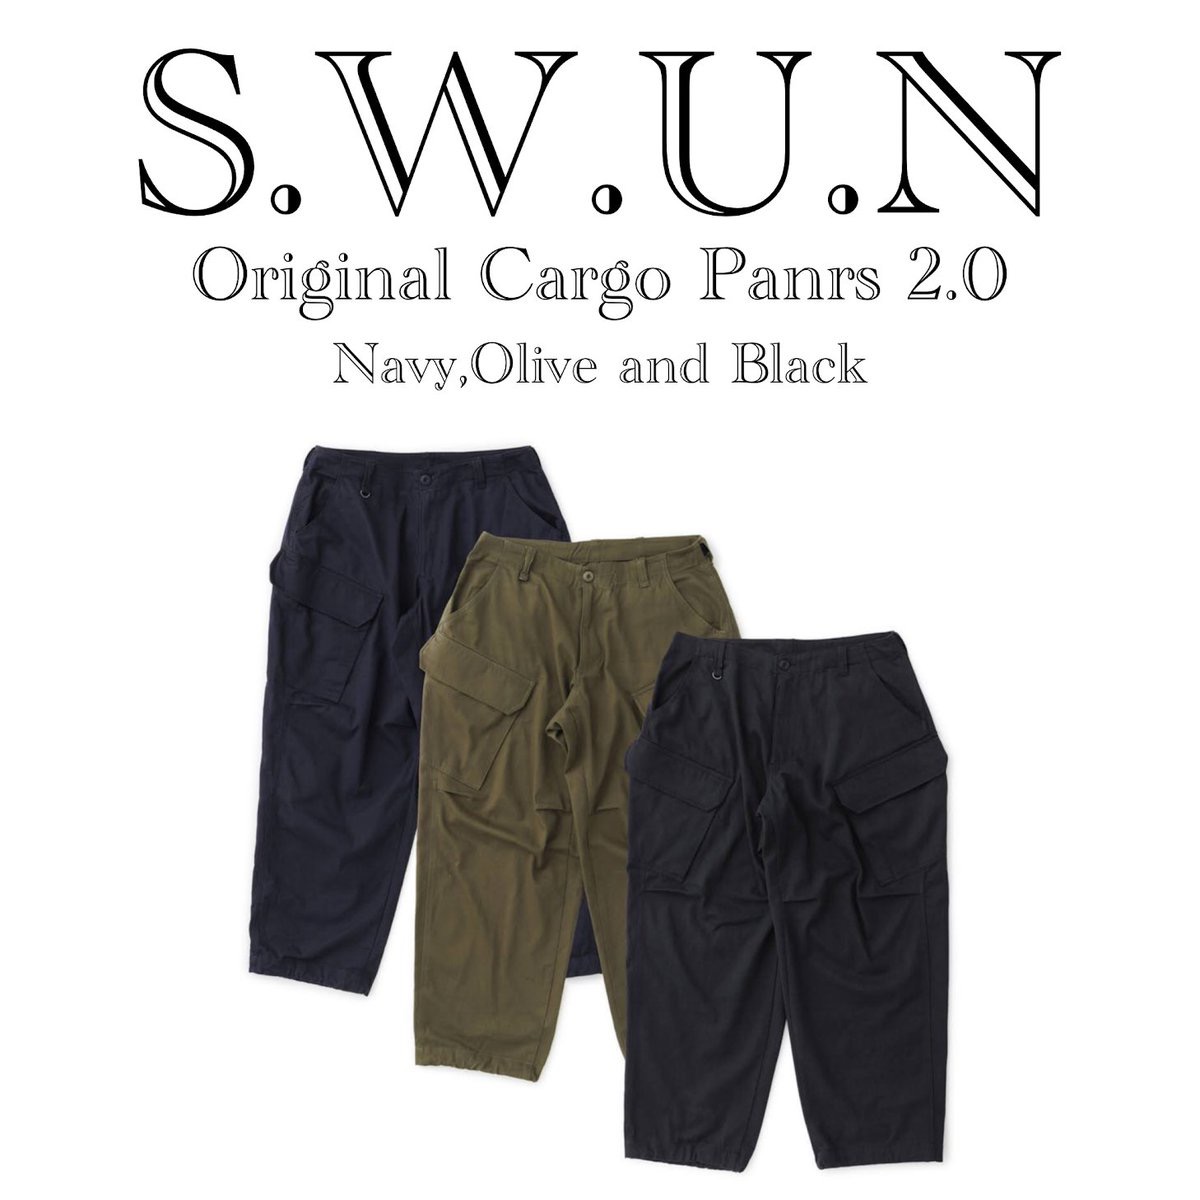 S.W.U.N Original Cargo Pants 2.0 ブラック